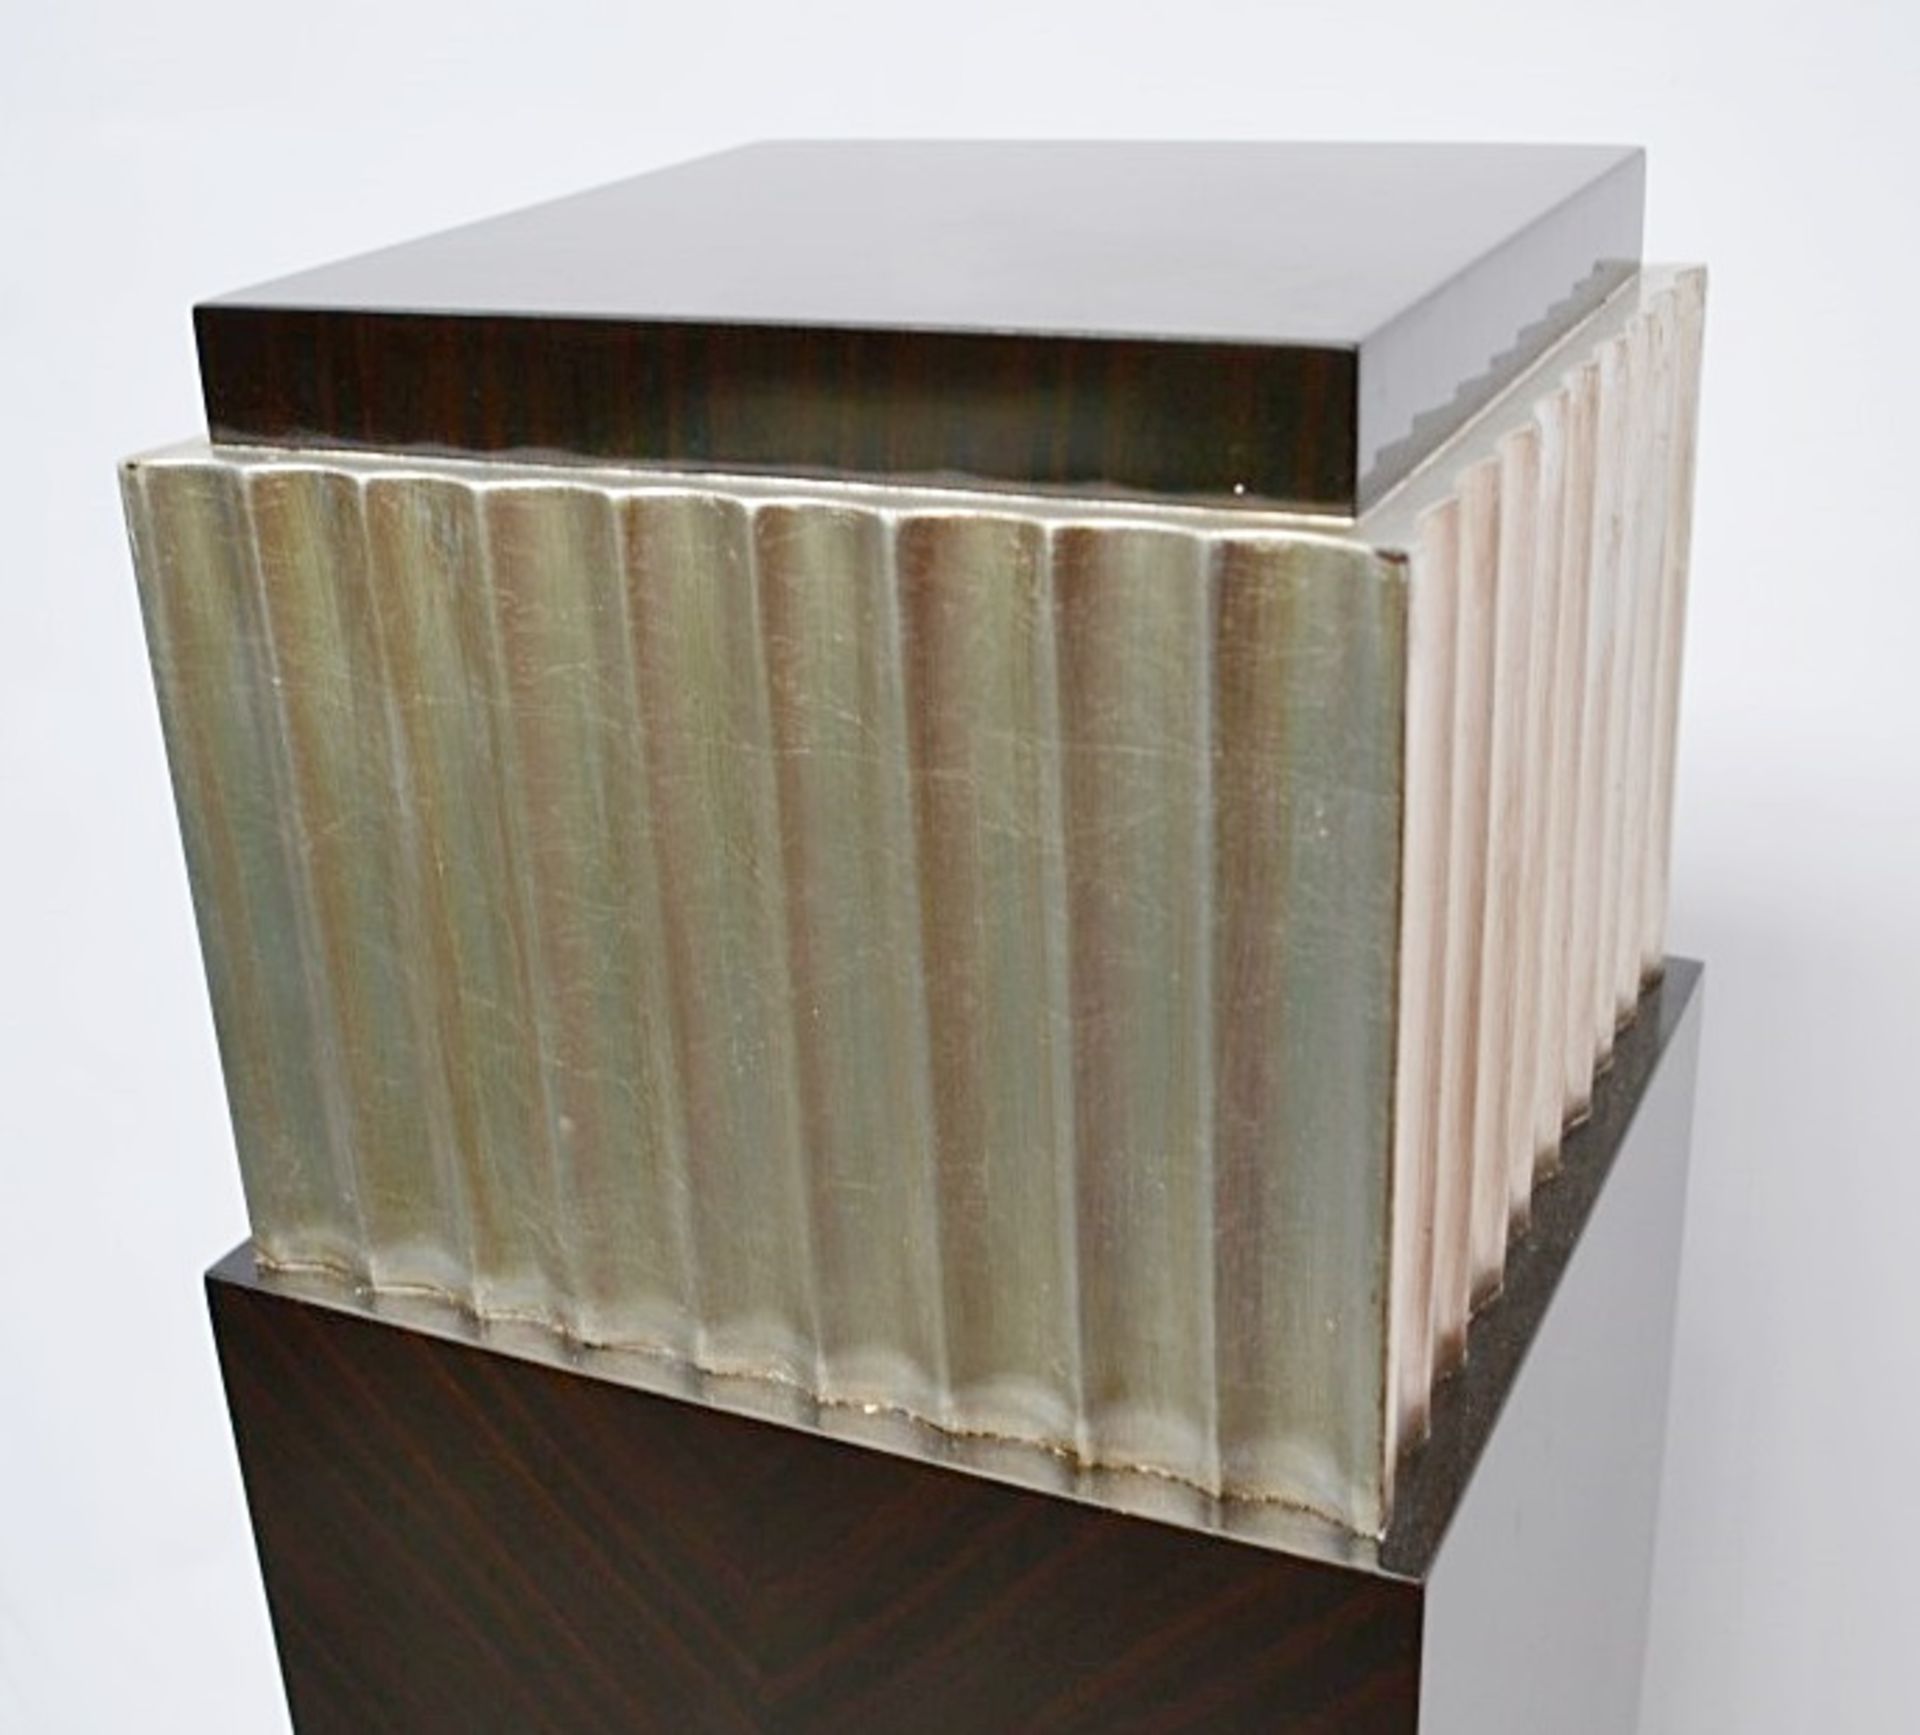 1 x EPOCA HOME INTERIORS Pedestal Timeo - Dimensions: 40x40x140cm - Ref: 4357884 - CL087 - Location: - Image 6 of 6